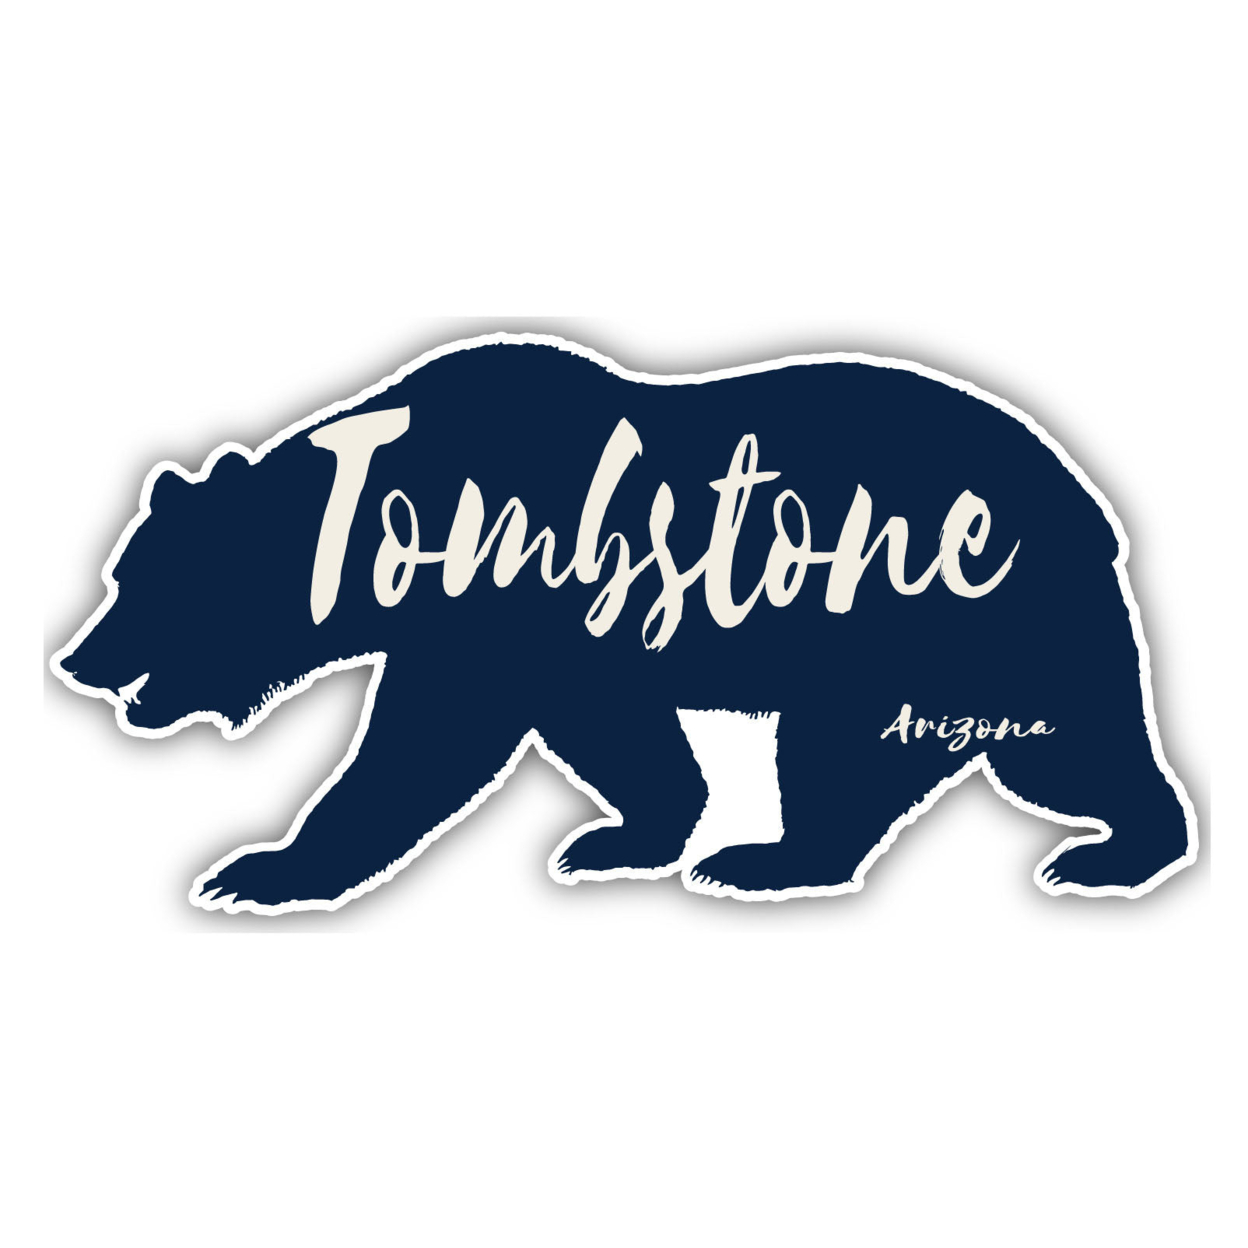 Tombstone Arizona Souvenir Decorative Stickers (Choose Theme And Size) - Single Unit, 4-Inch, Bear